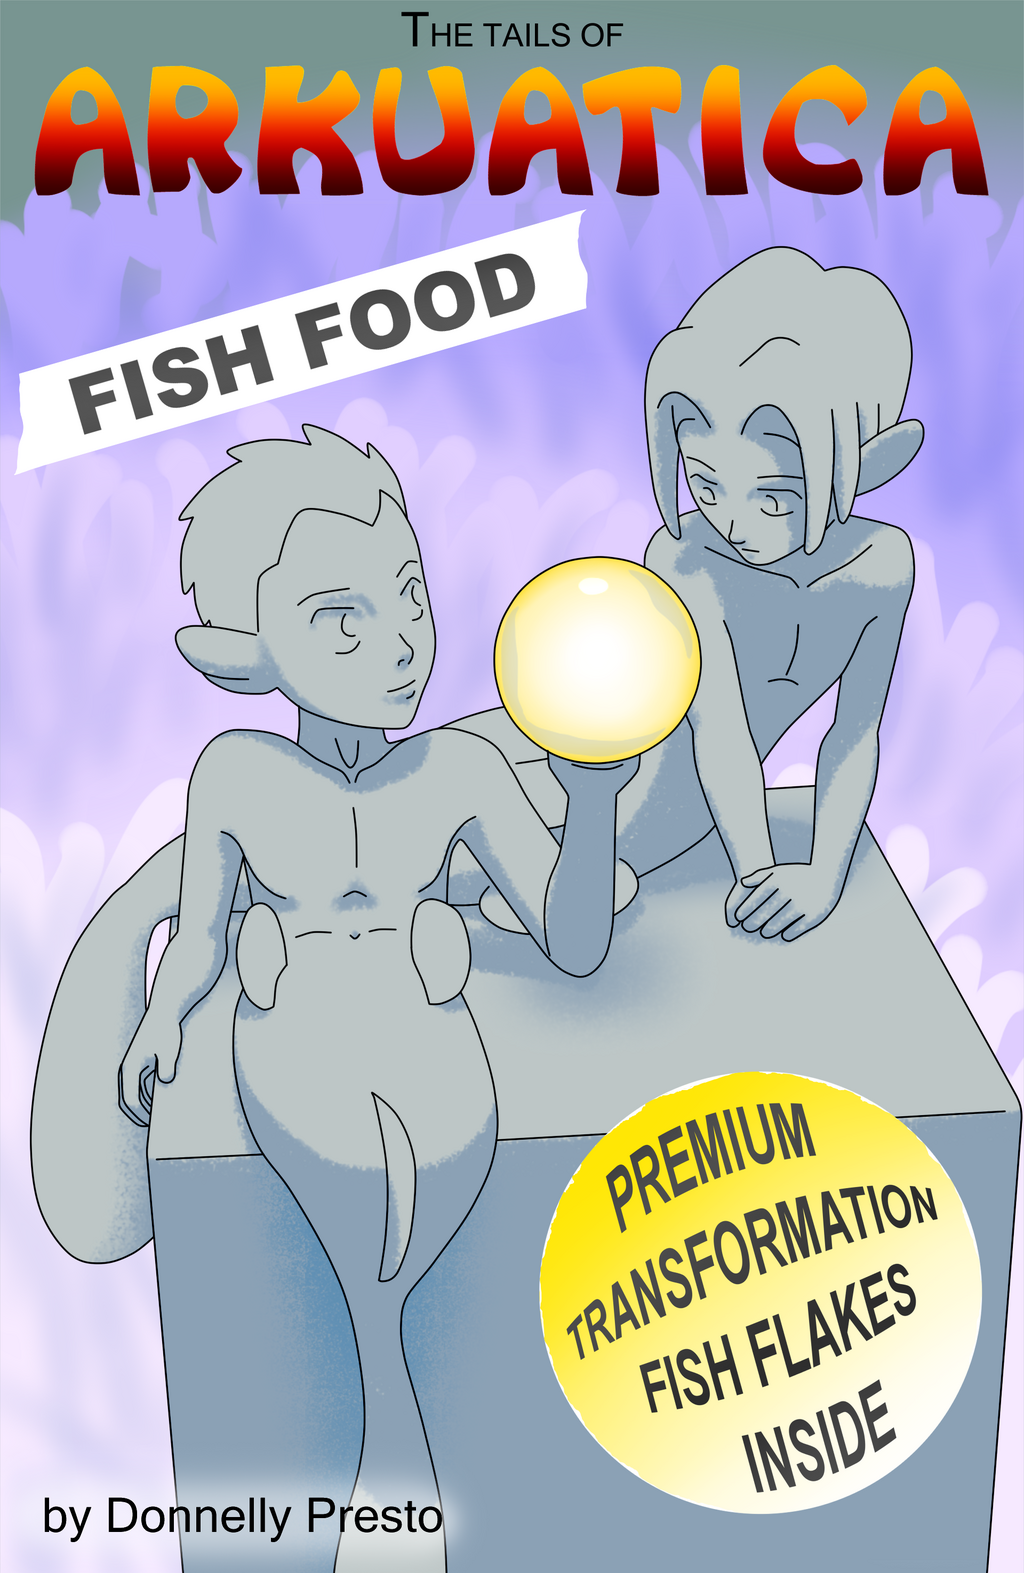 Arkuatica: Fish Food